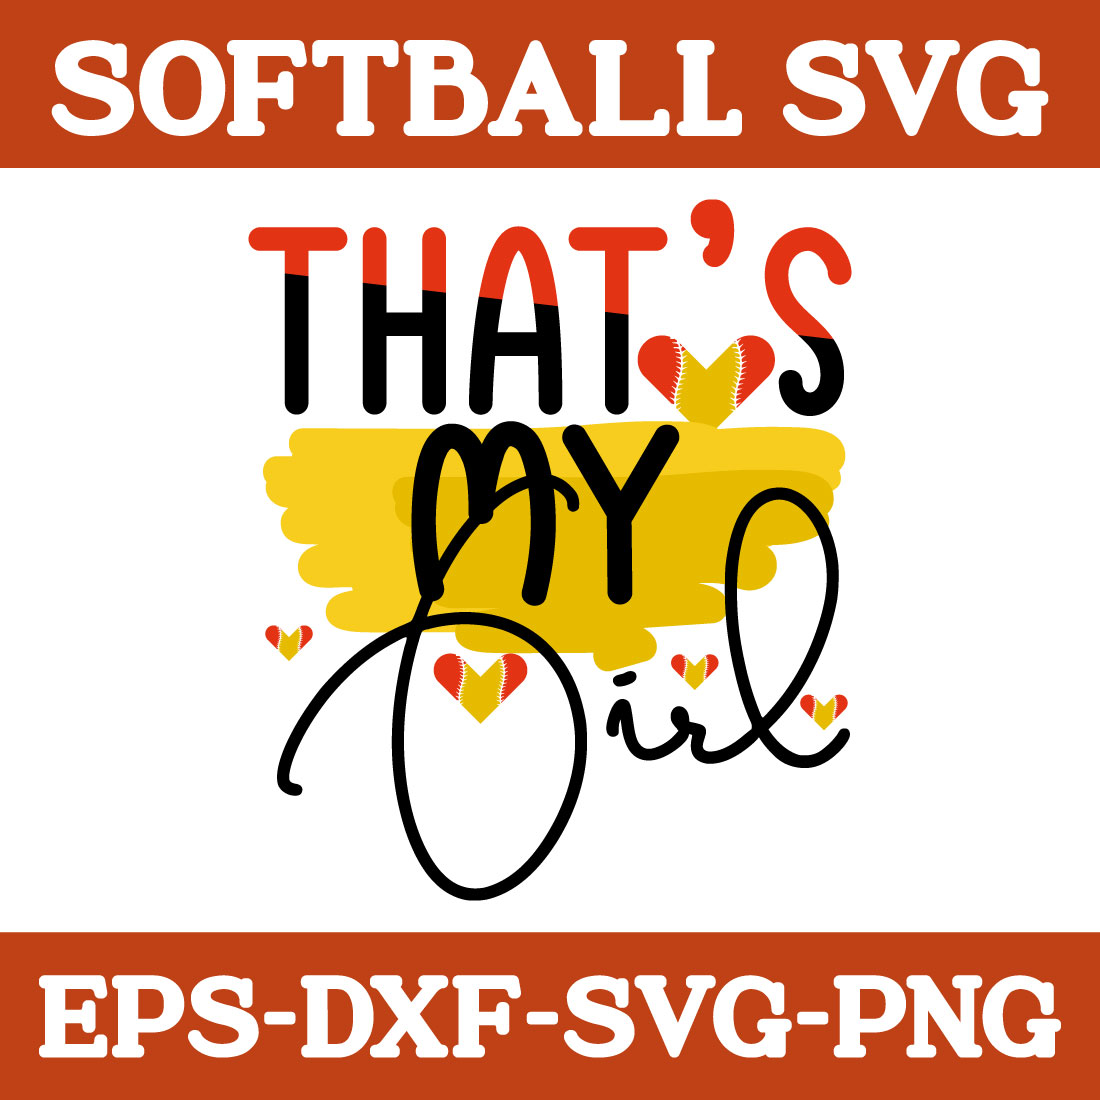 Softball Svg preview image.